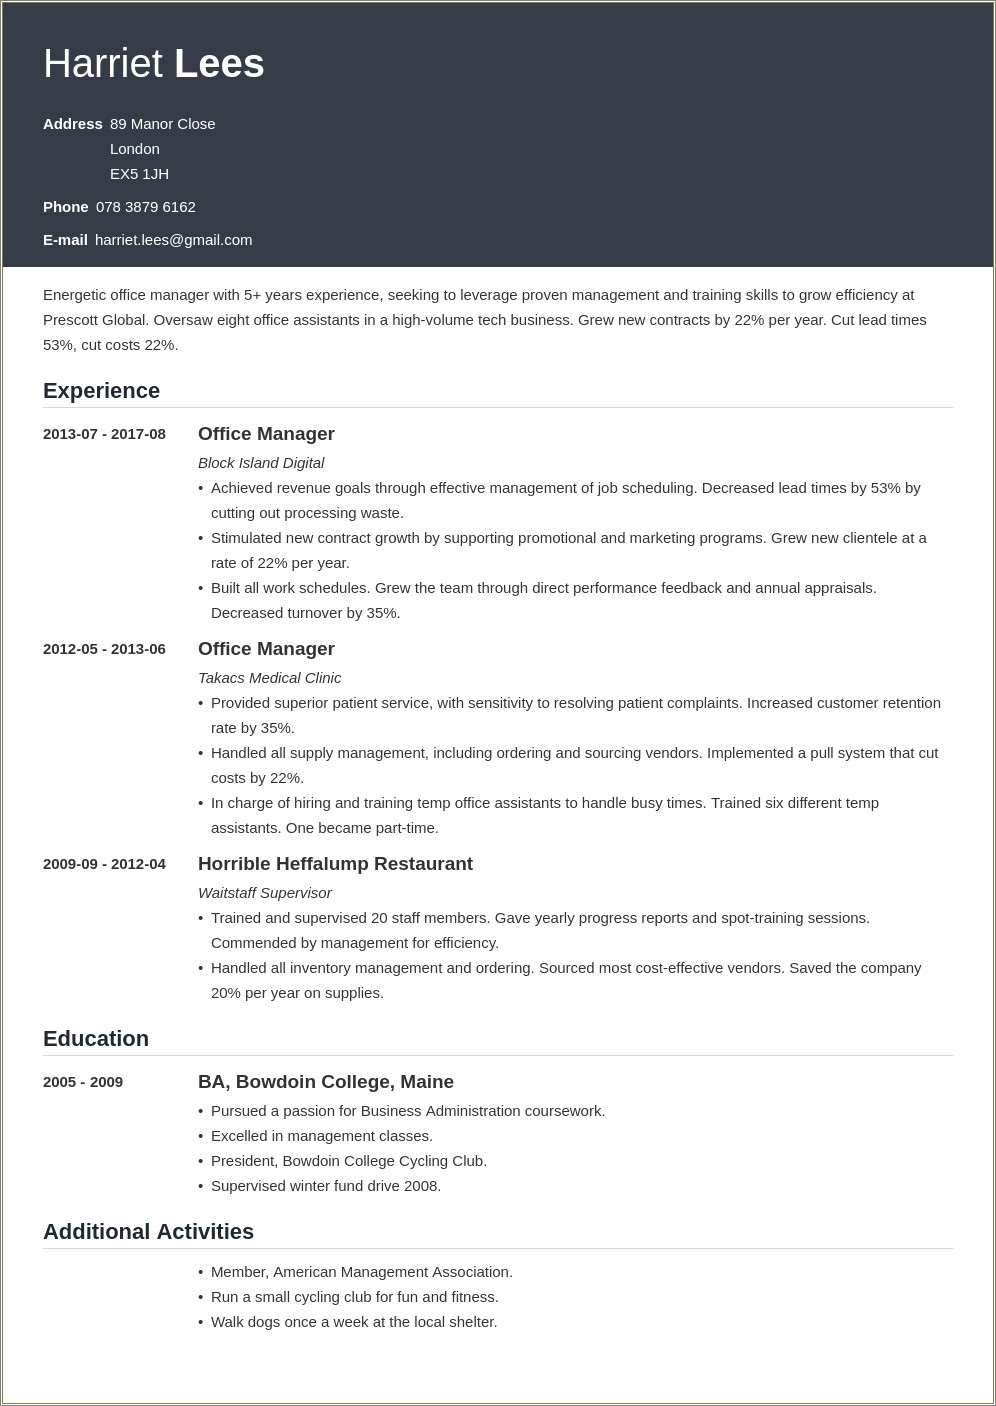 Resume Office Manager Job Description Bullet Points